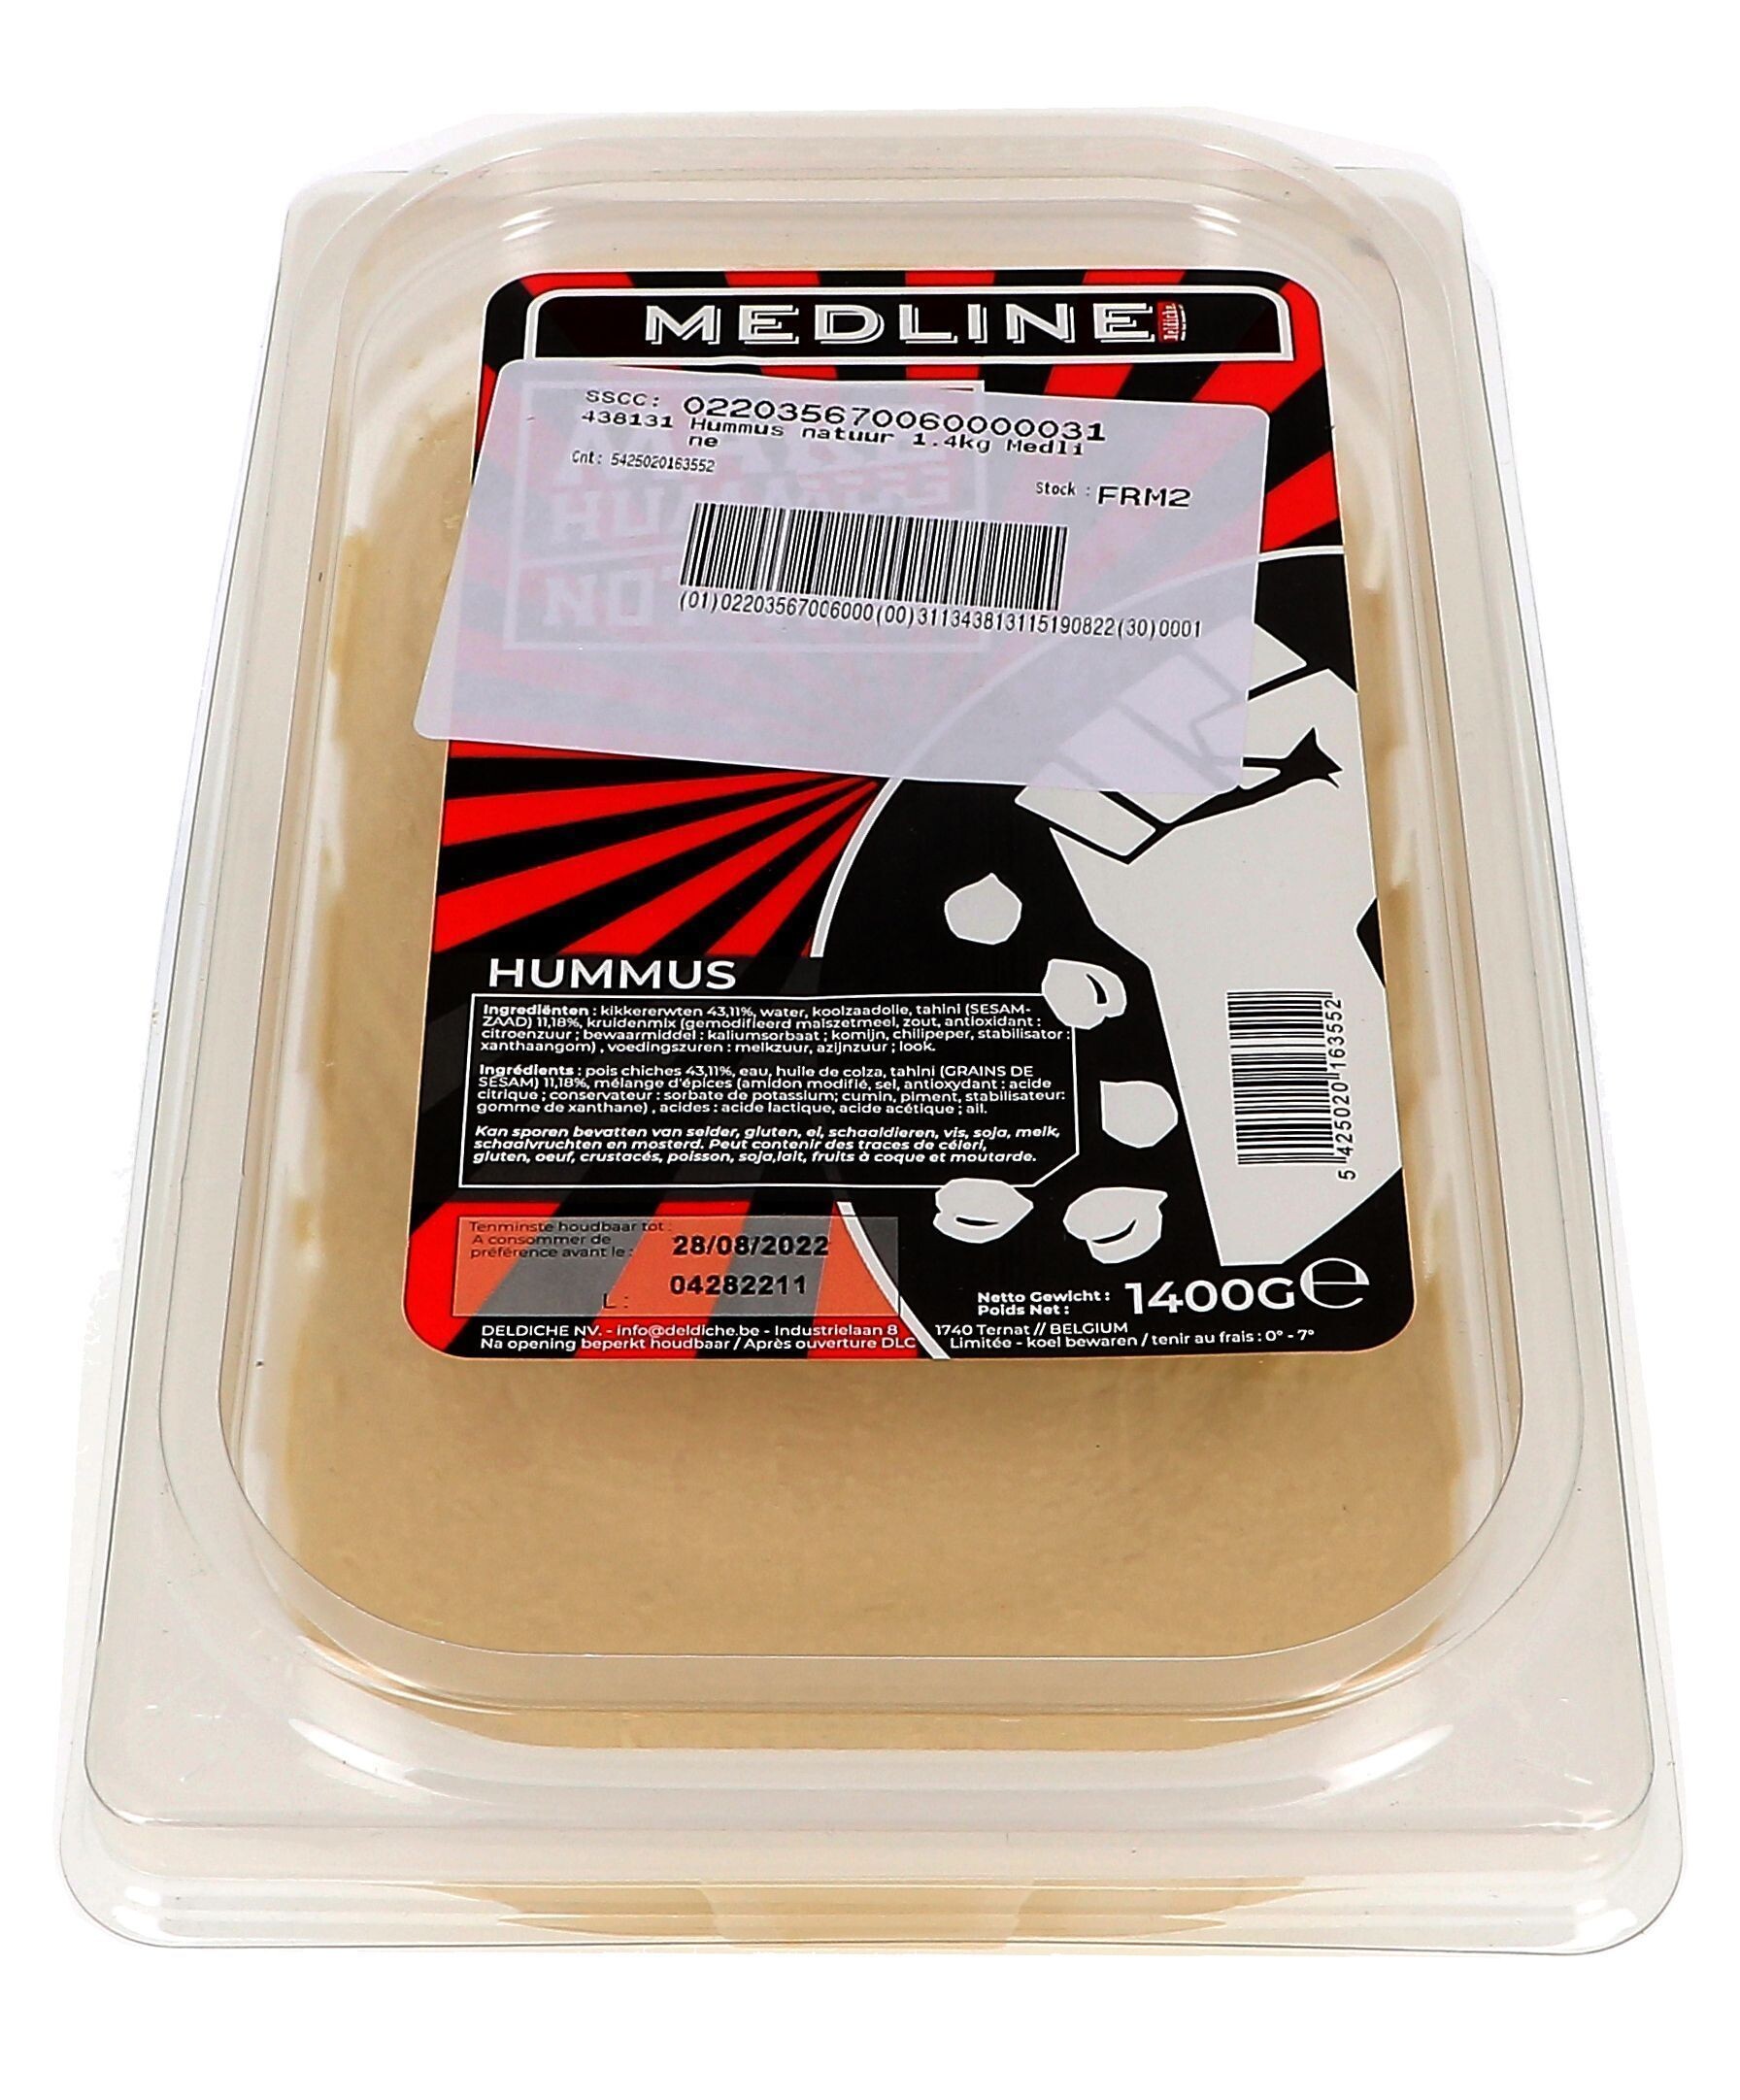 Medline Hummus Natural 1400gr Deldiche